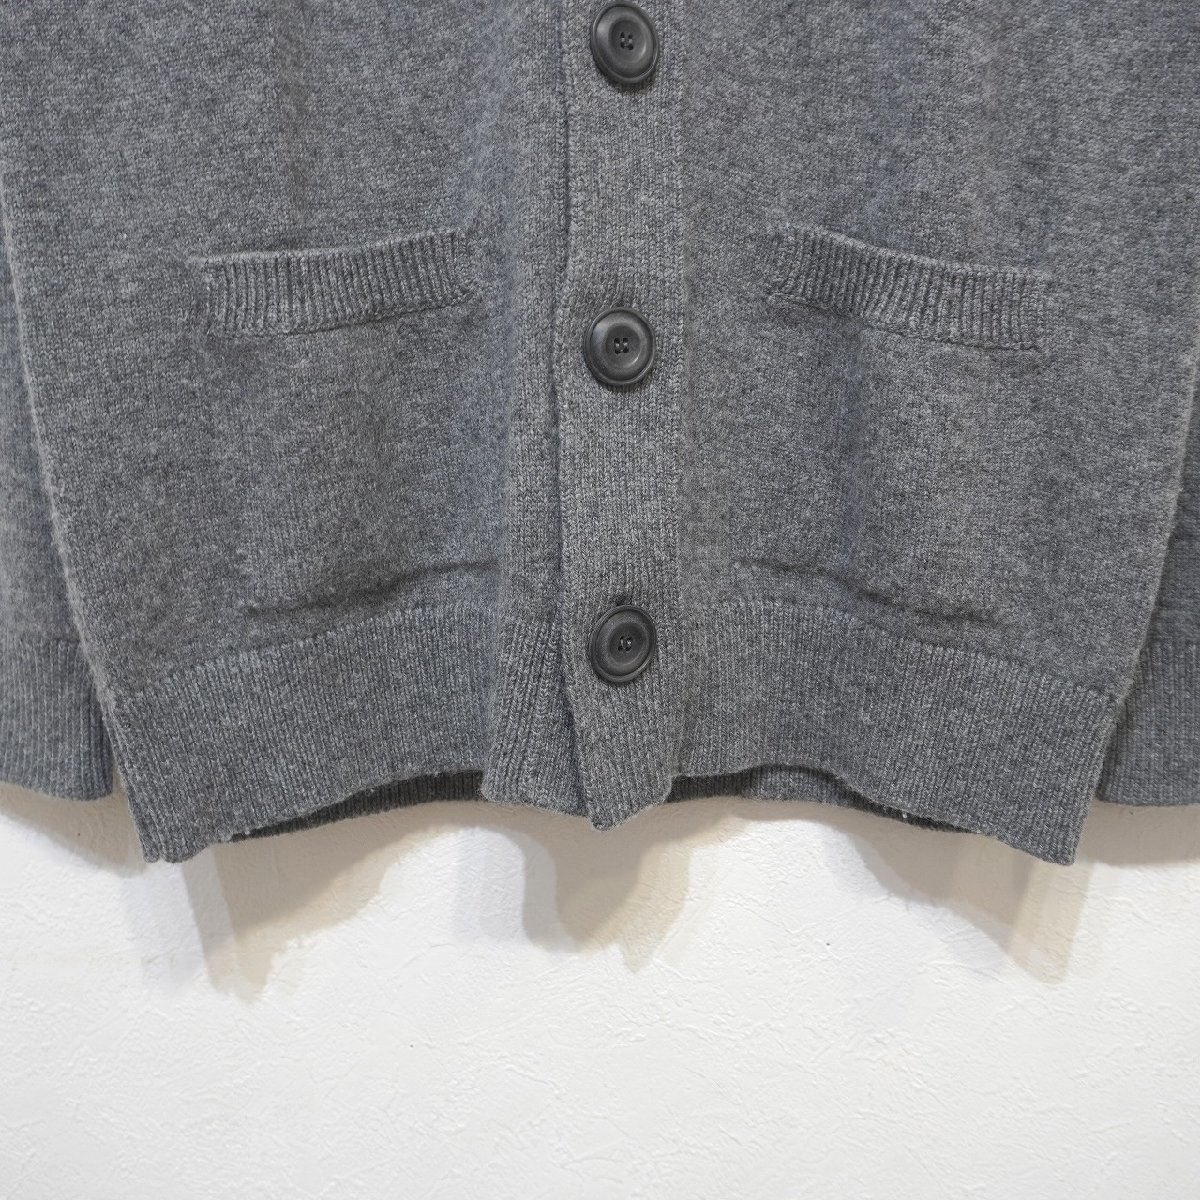 FILIPPO DE LAURENTIIS wool cashmere cardigan gray Italy made filipote low Len tis men's H9-122